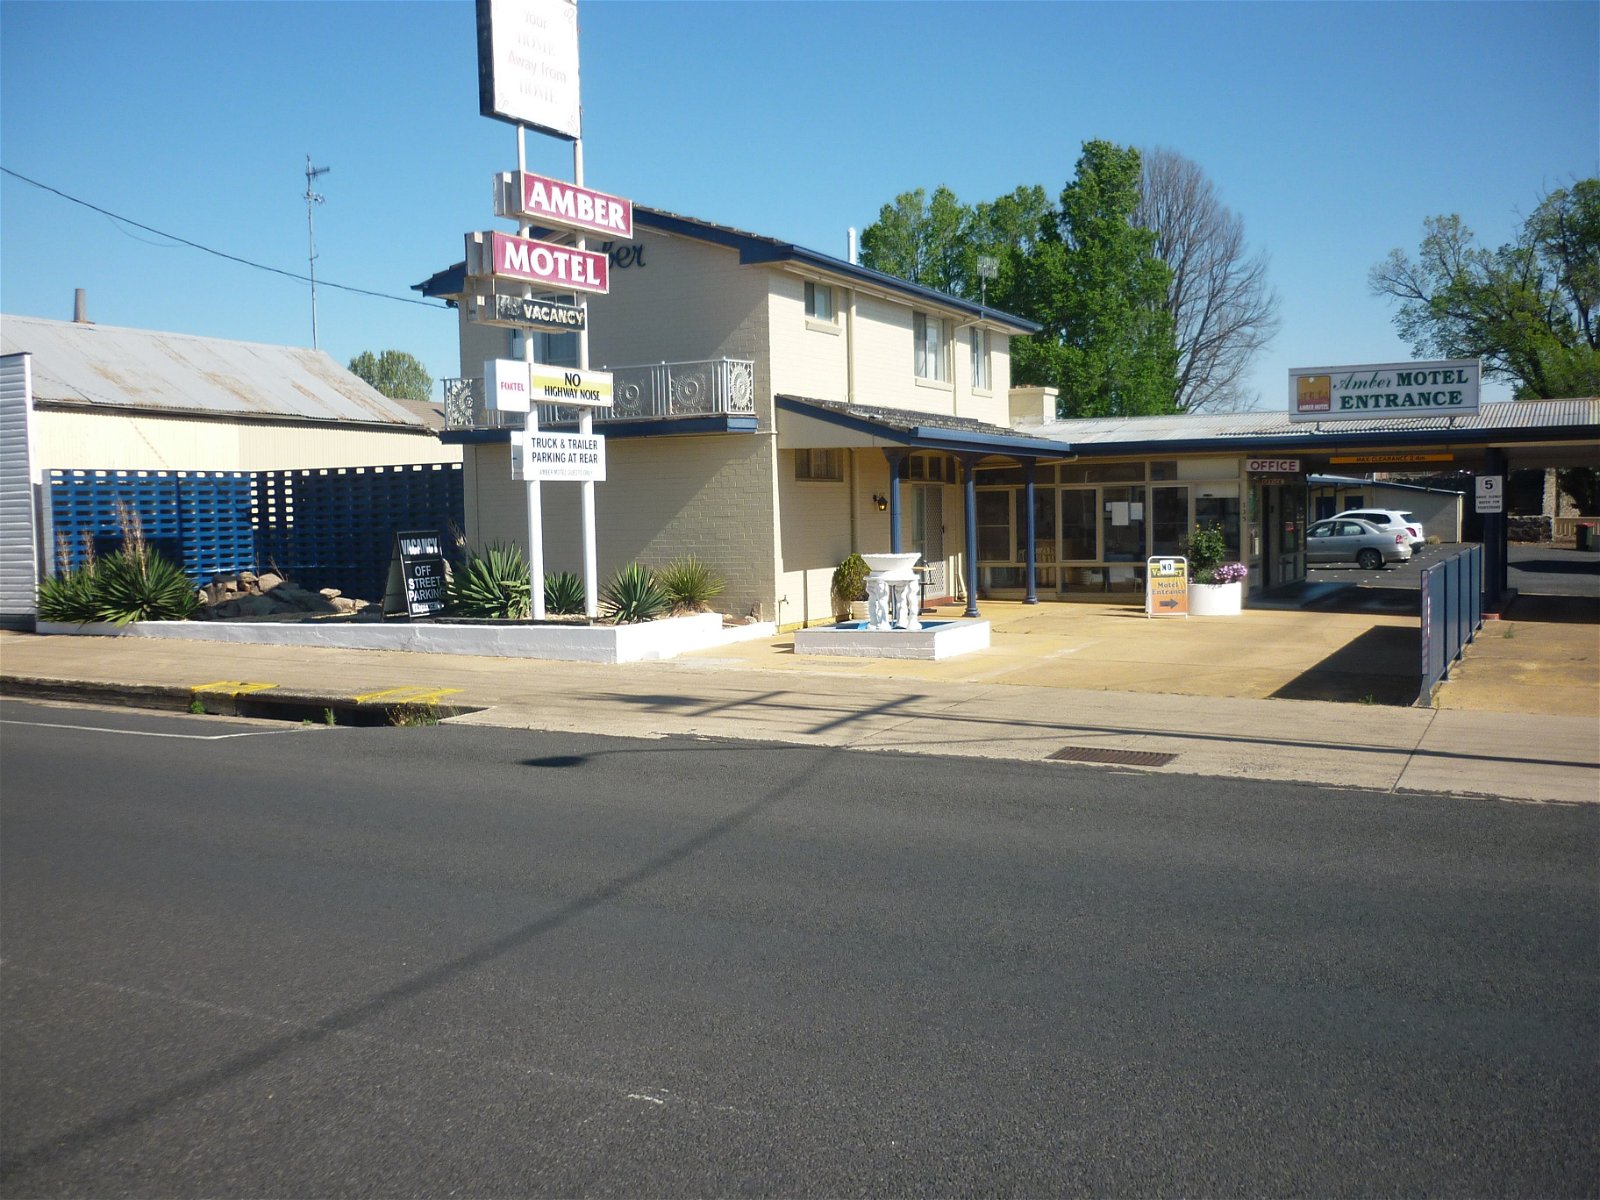 Motel Tourism Canberra